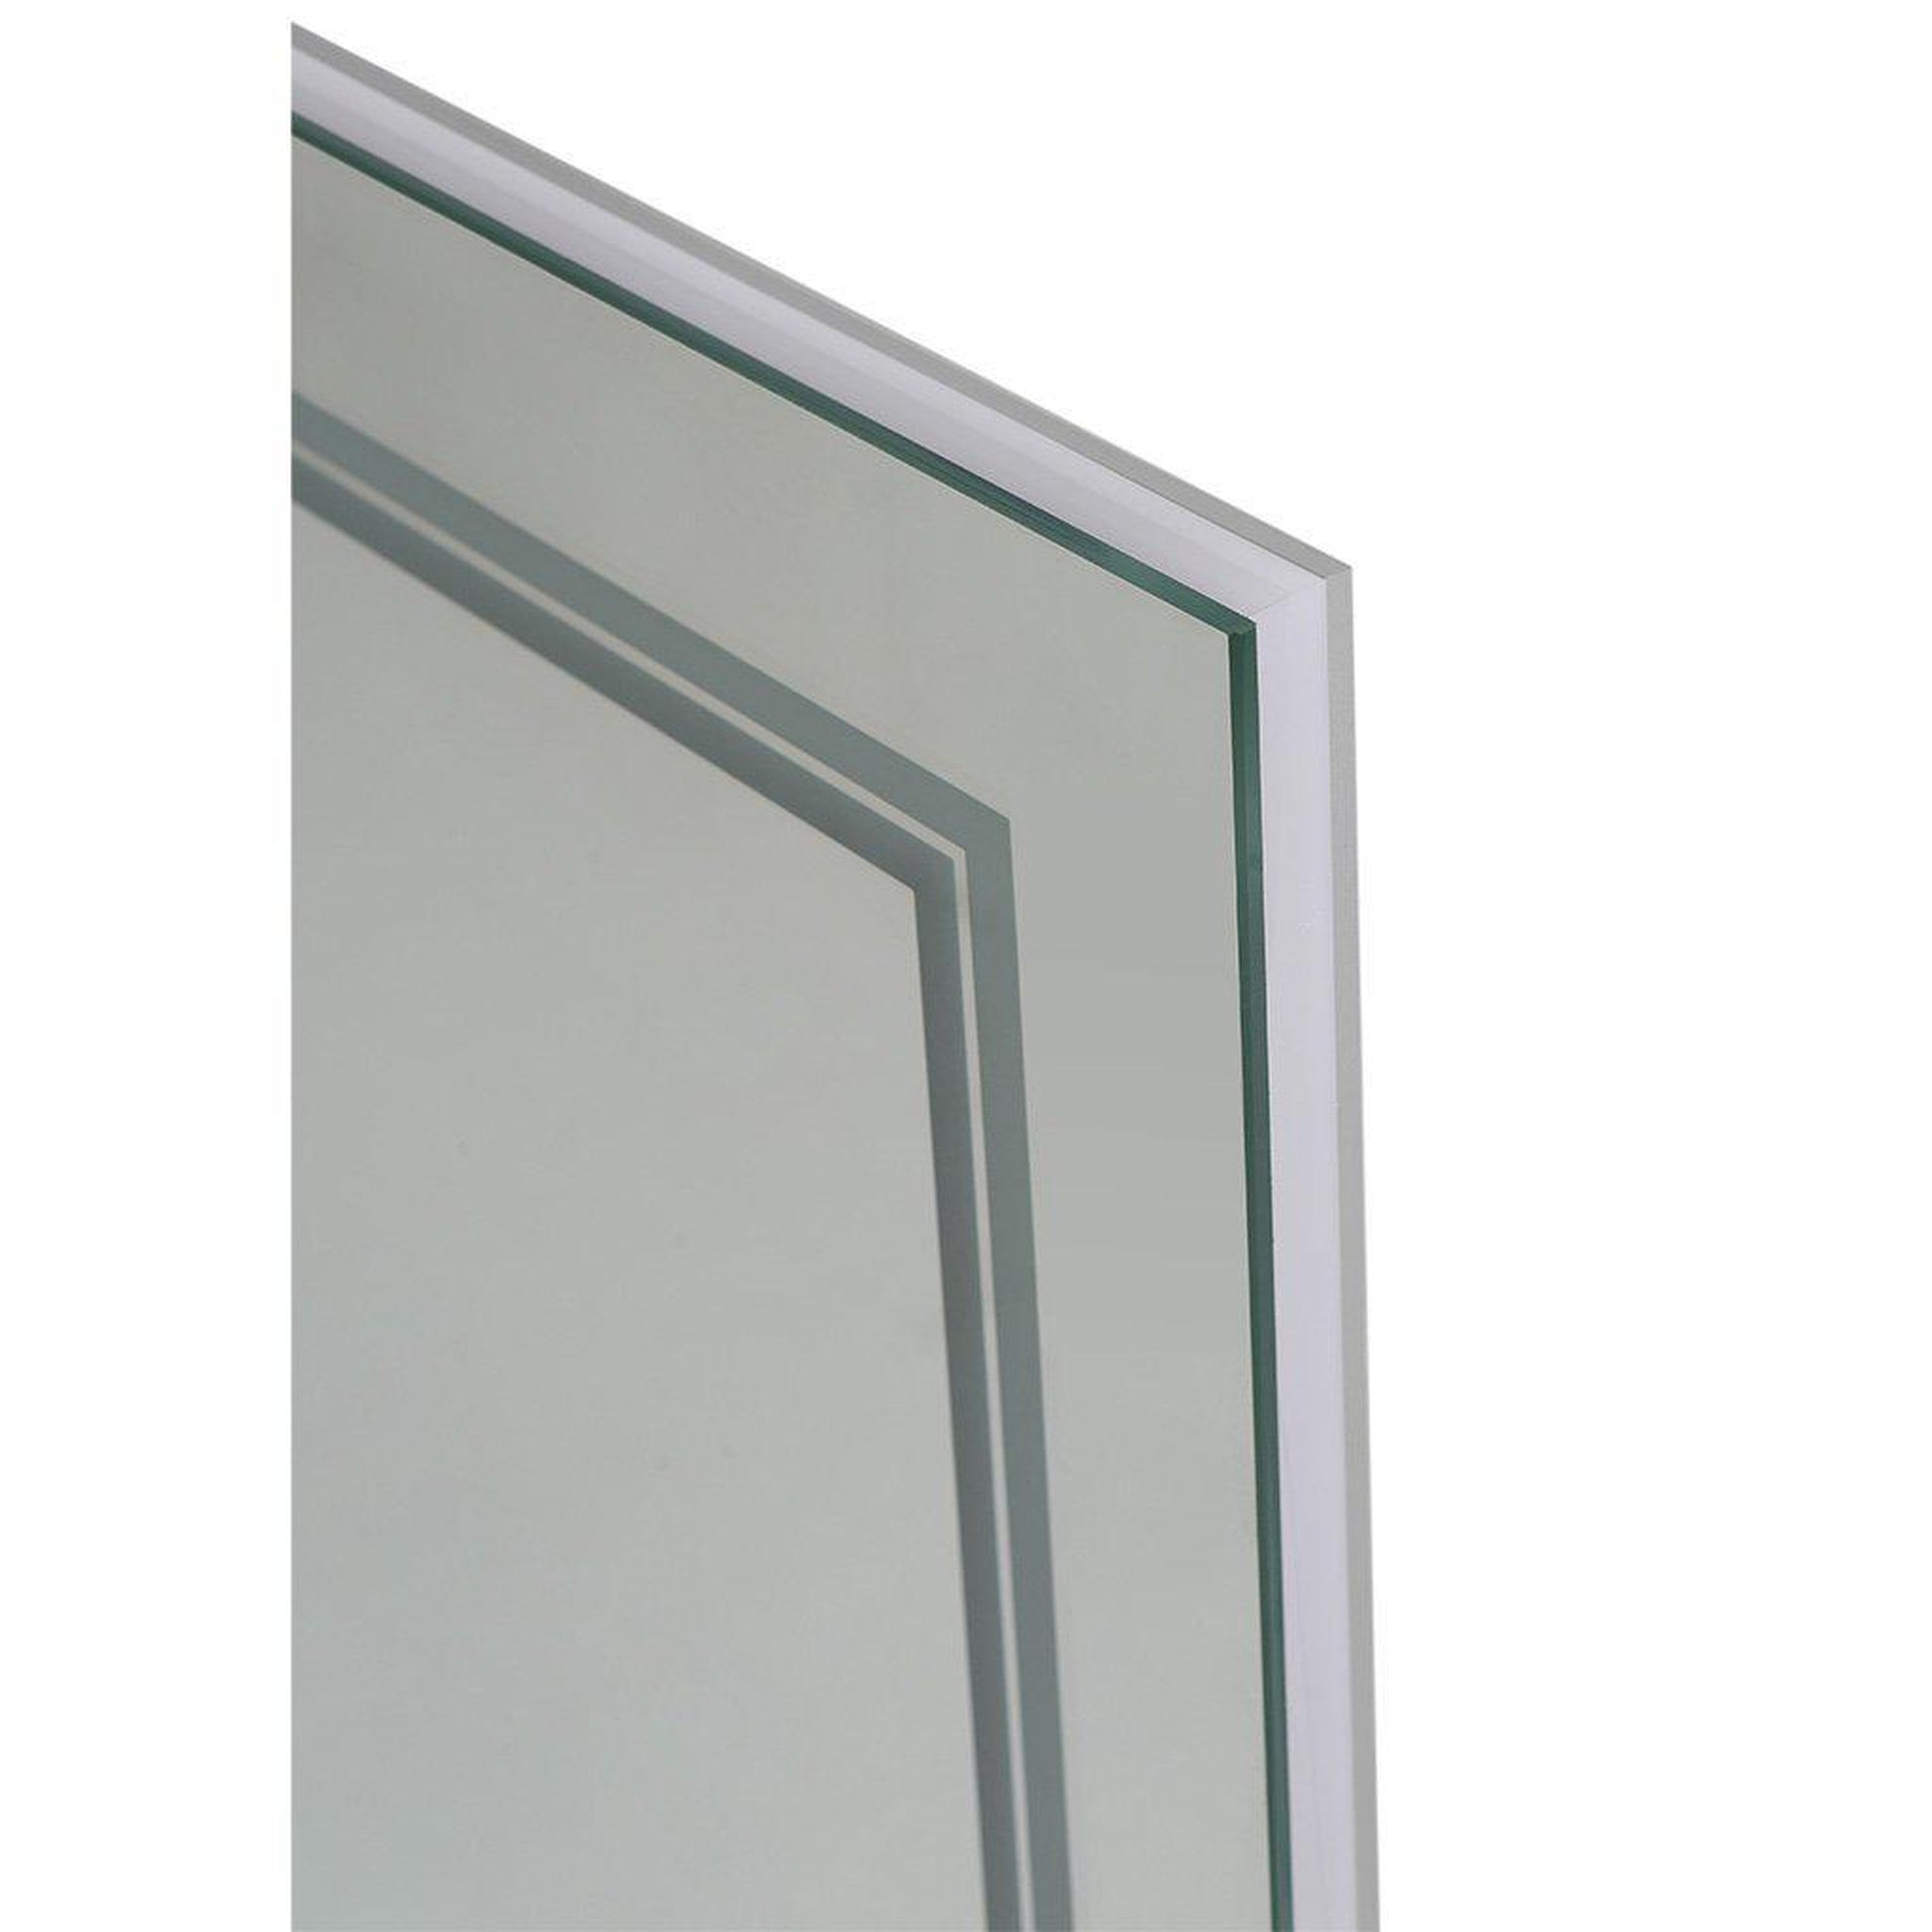 Aquadom SOHO 60" X 36" Rectangular Ultra-Slim Frame LED Lighted Bathroom Mirror With Defogger